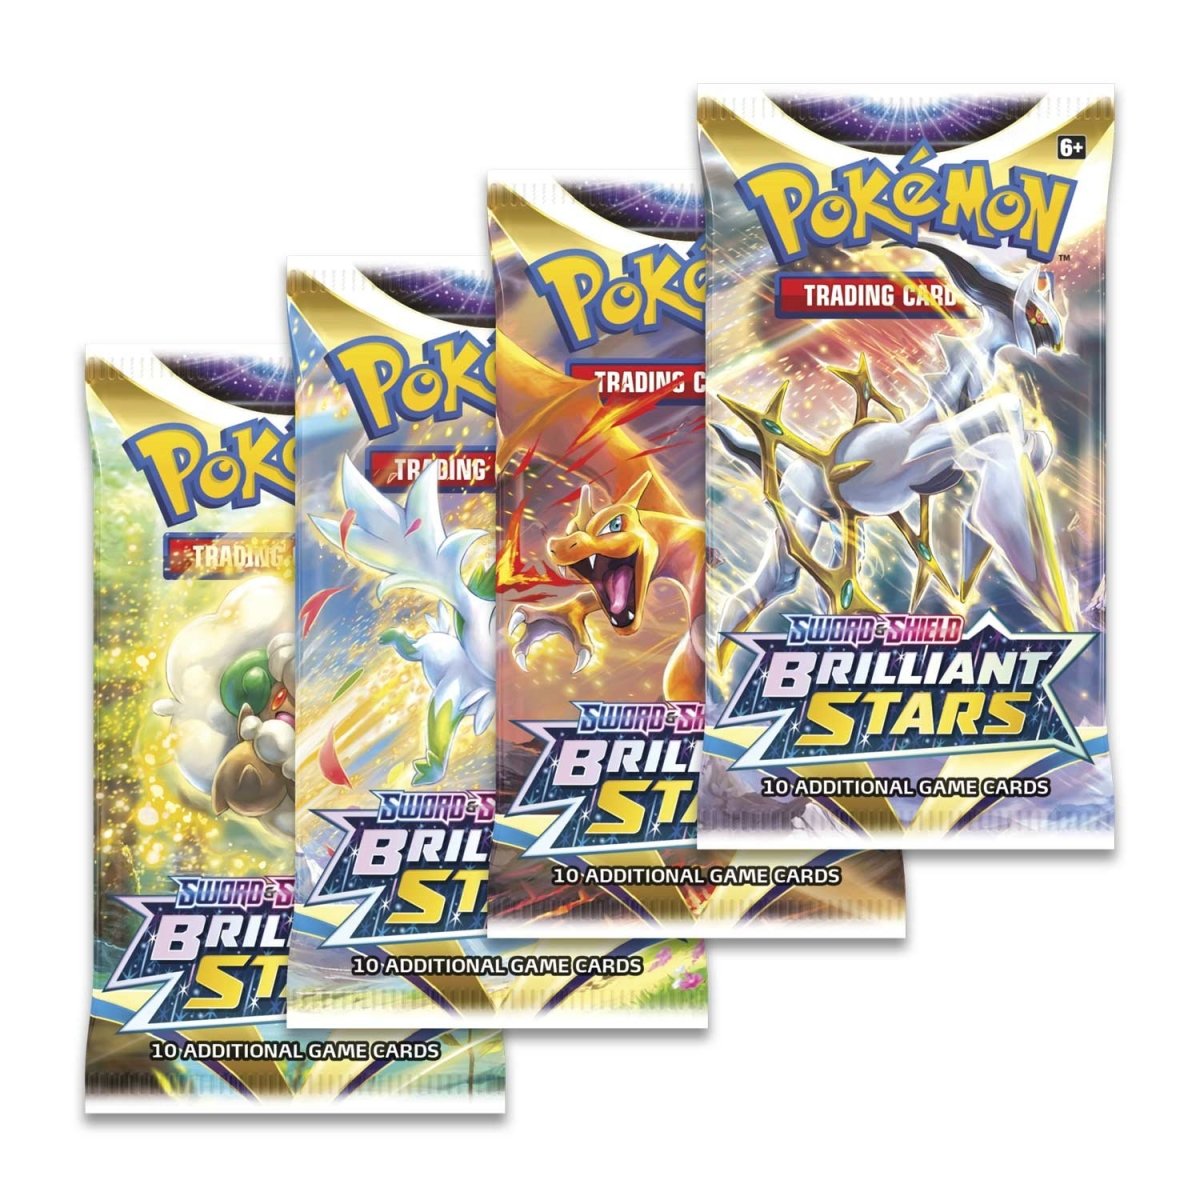 Pokémon Sword & Shield - Brilliant Stars Booster Pack